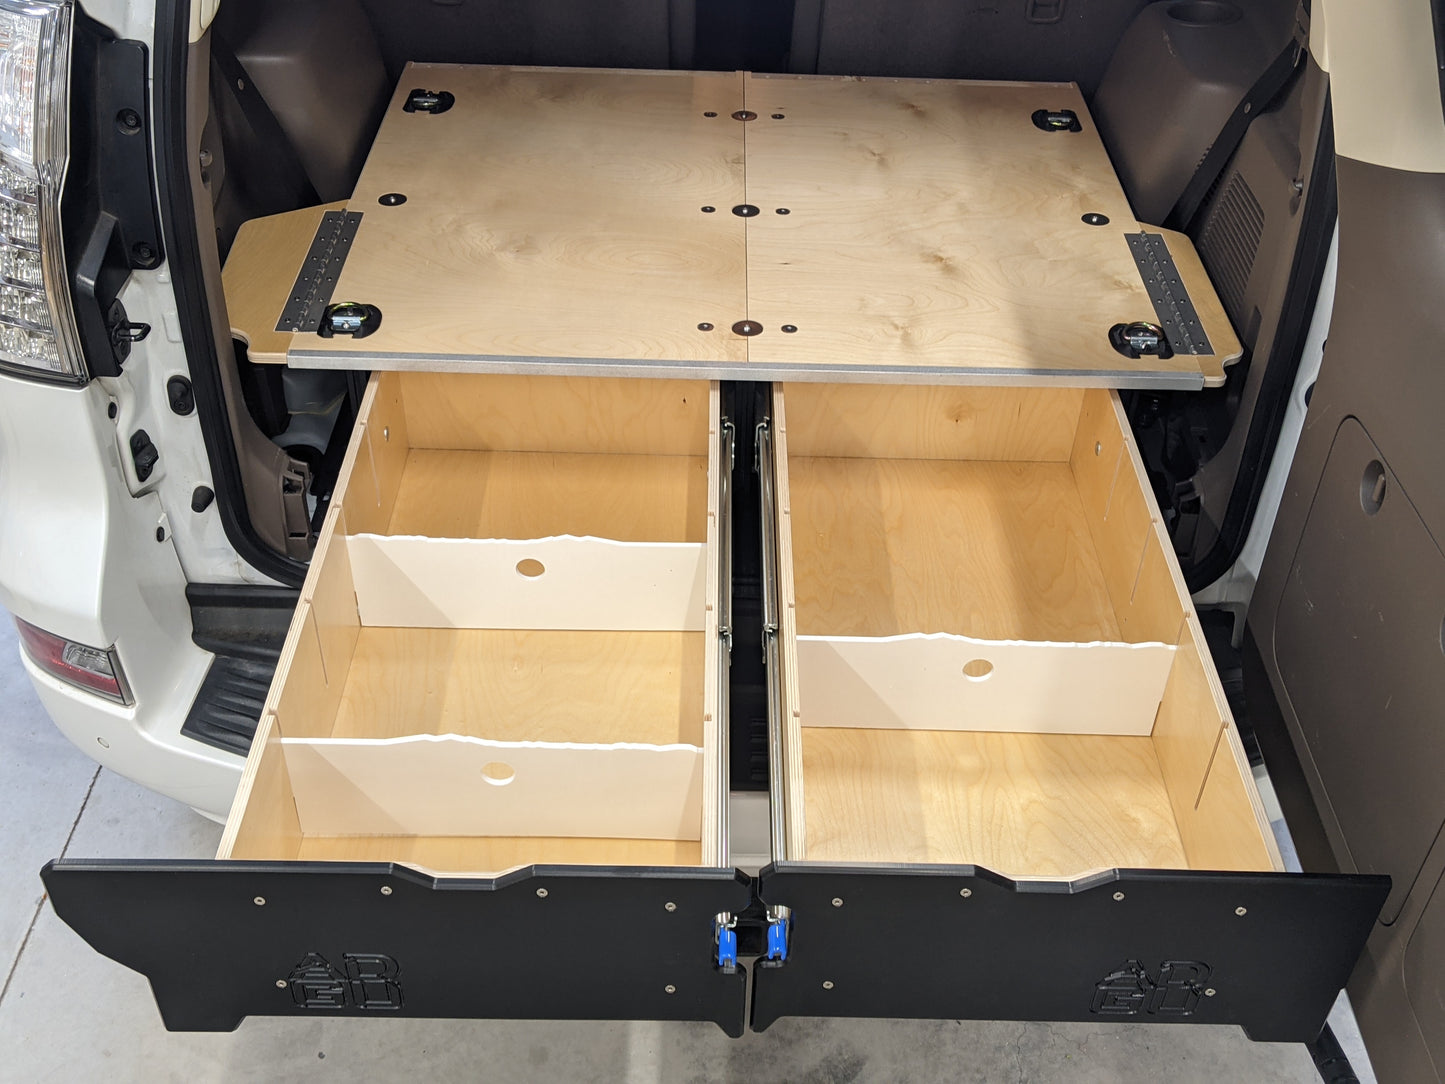 GX460 drawer system with sleeping platform for vehicle organization